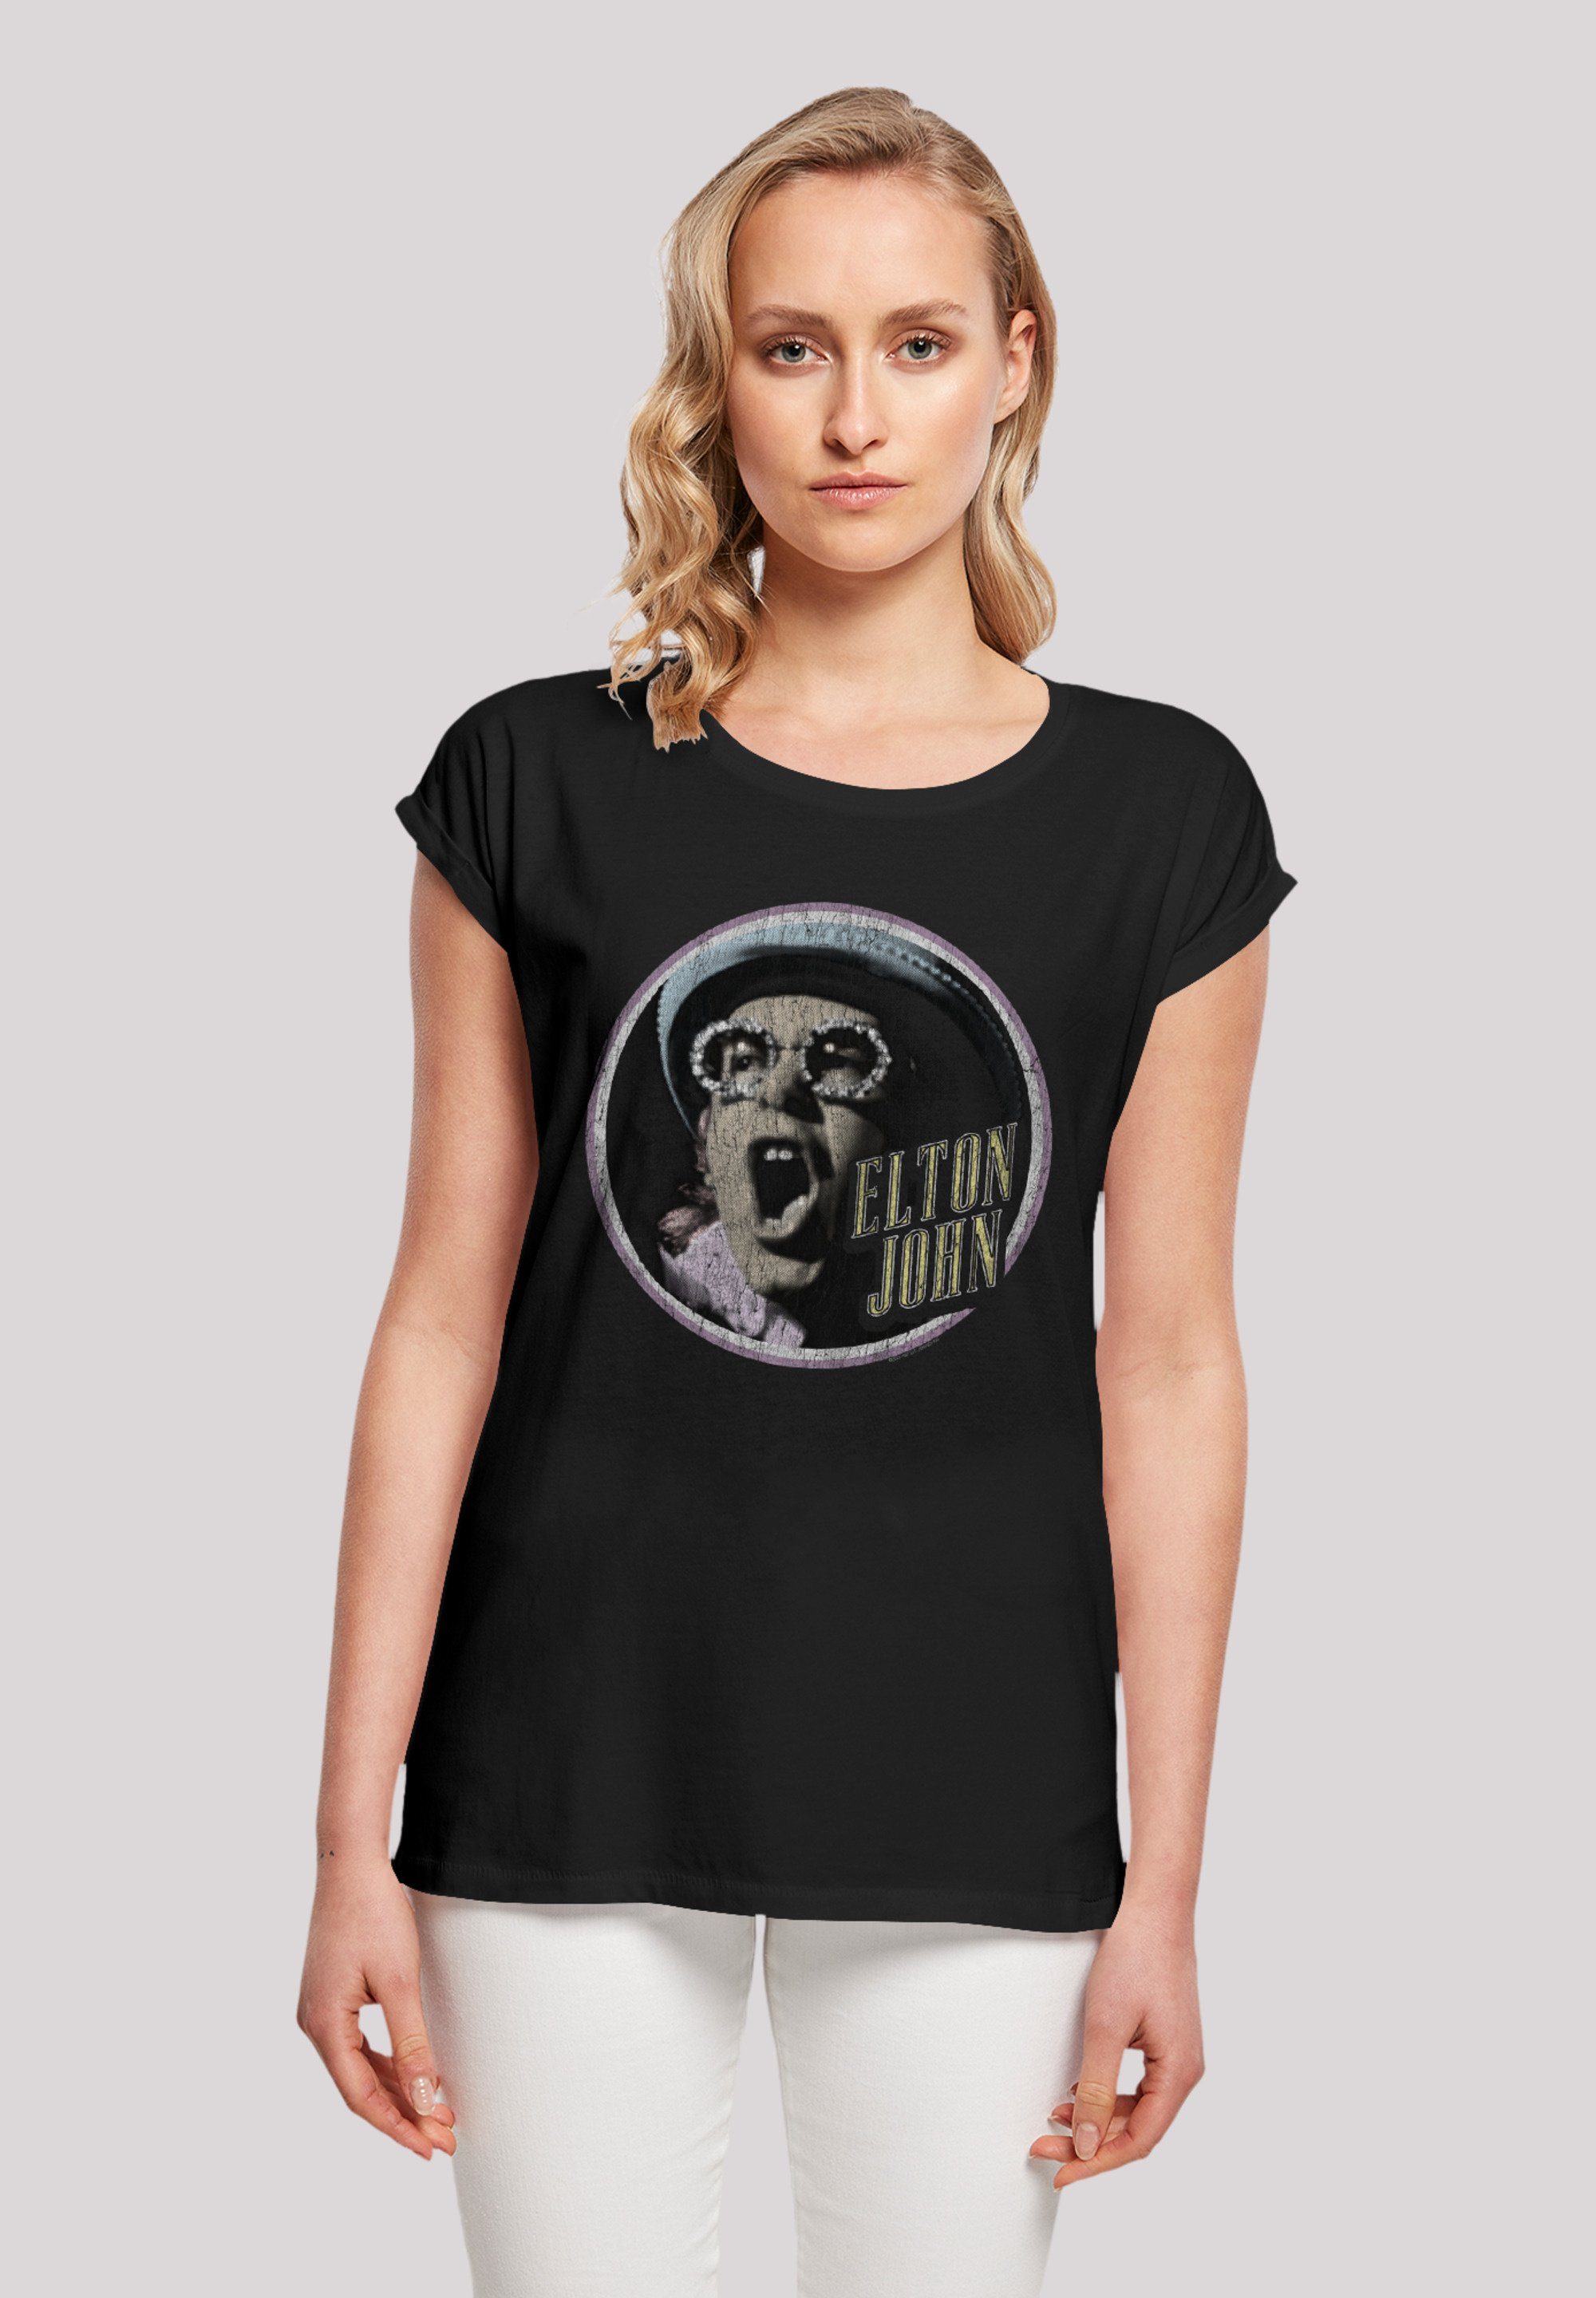 F4NT4STIC T-Shirt Elton John Vintage Circle Premium Qualität schwarz | T-Shirts